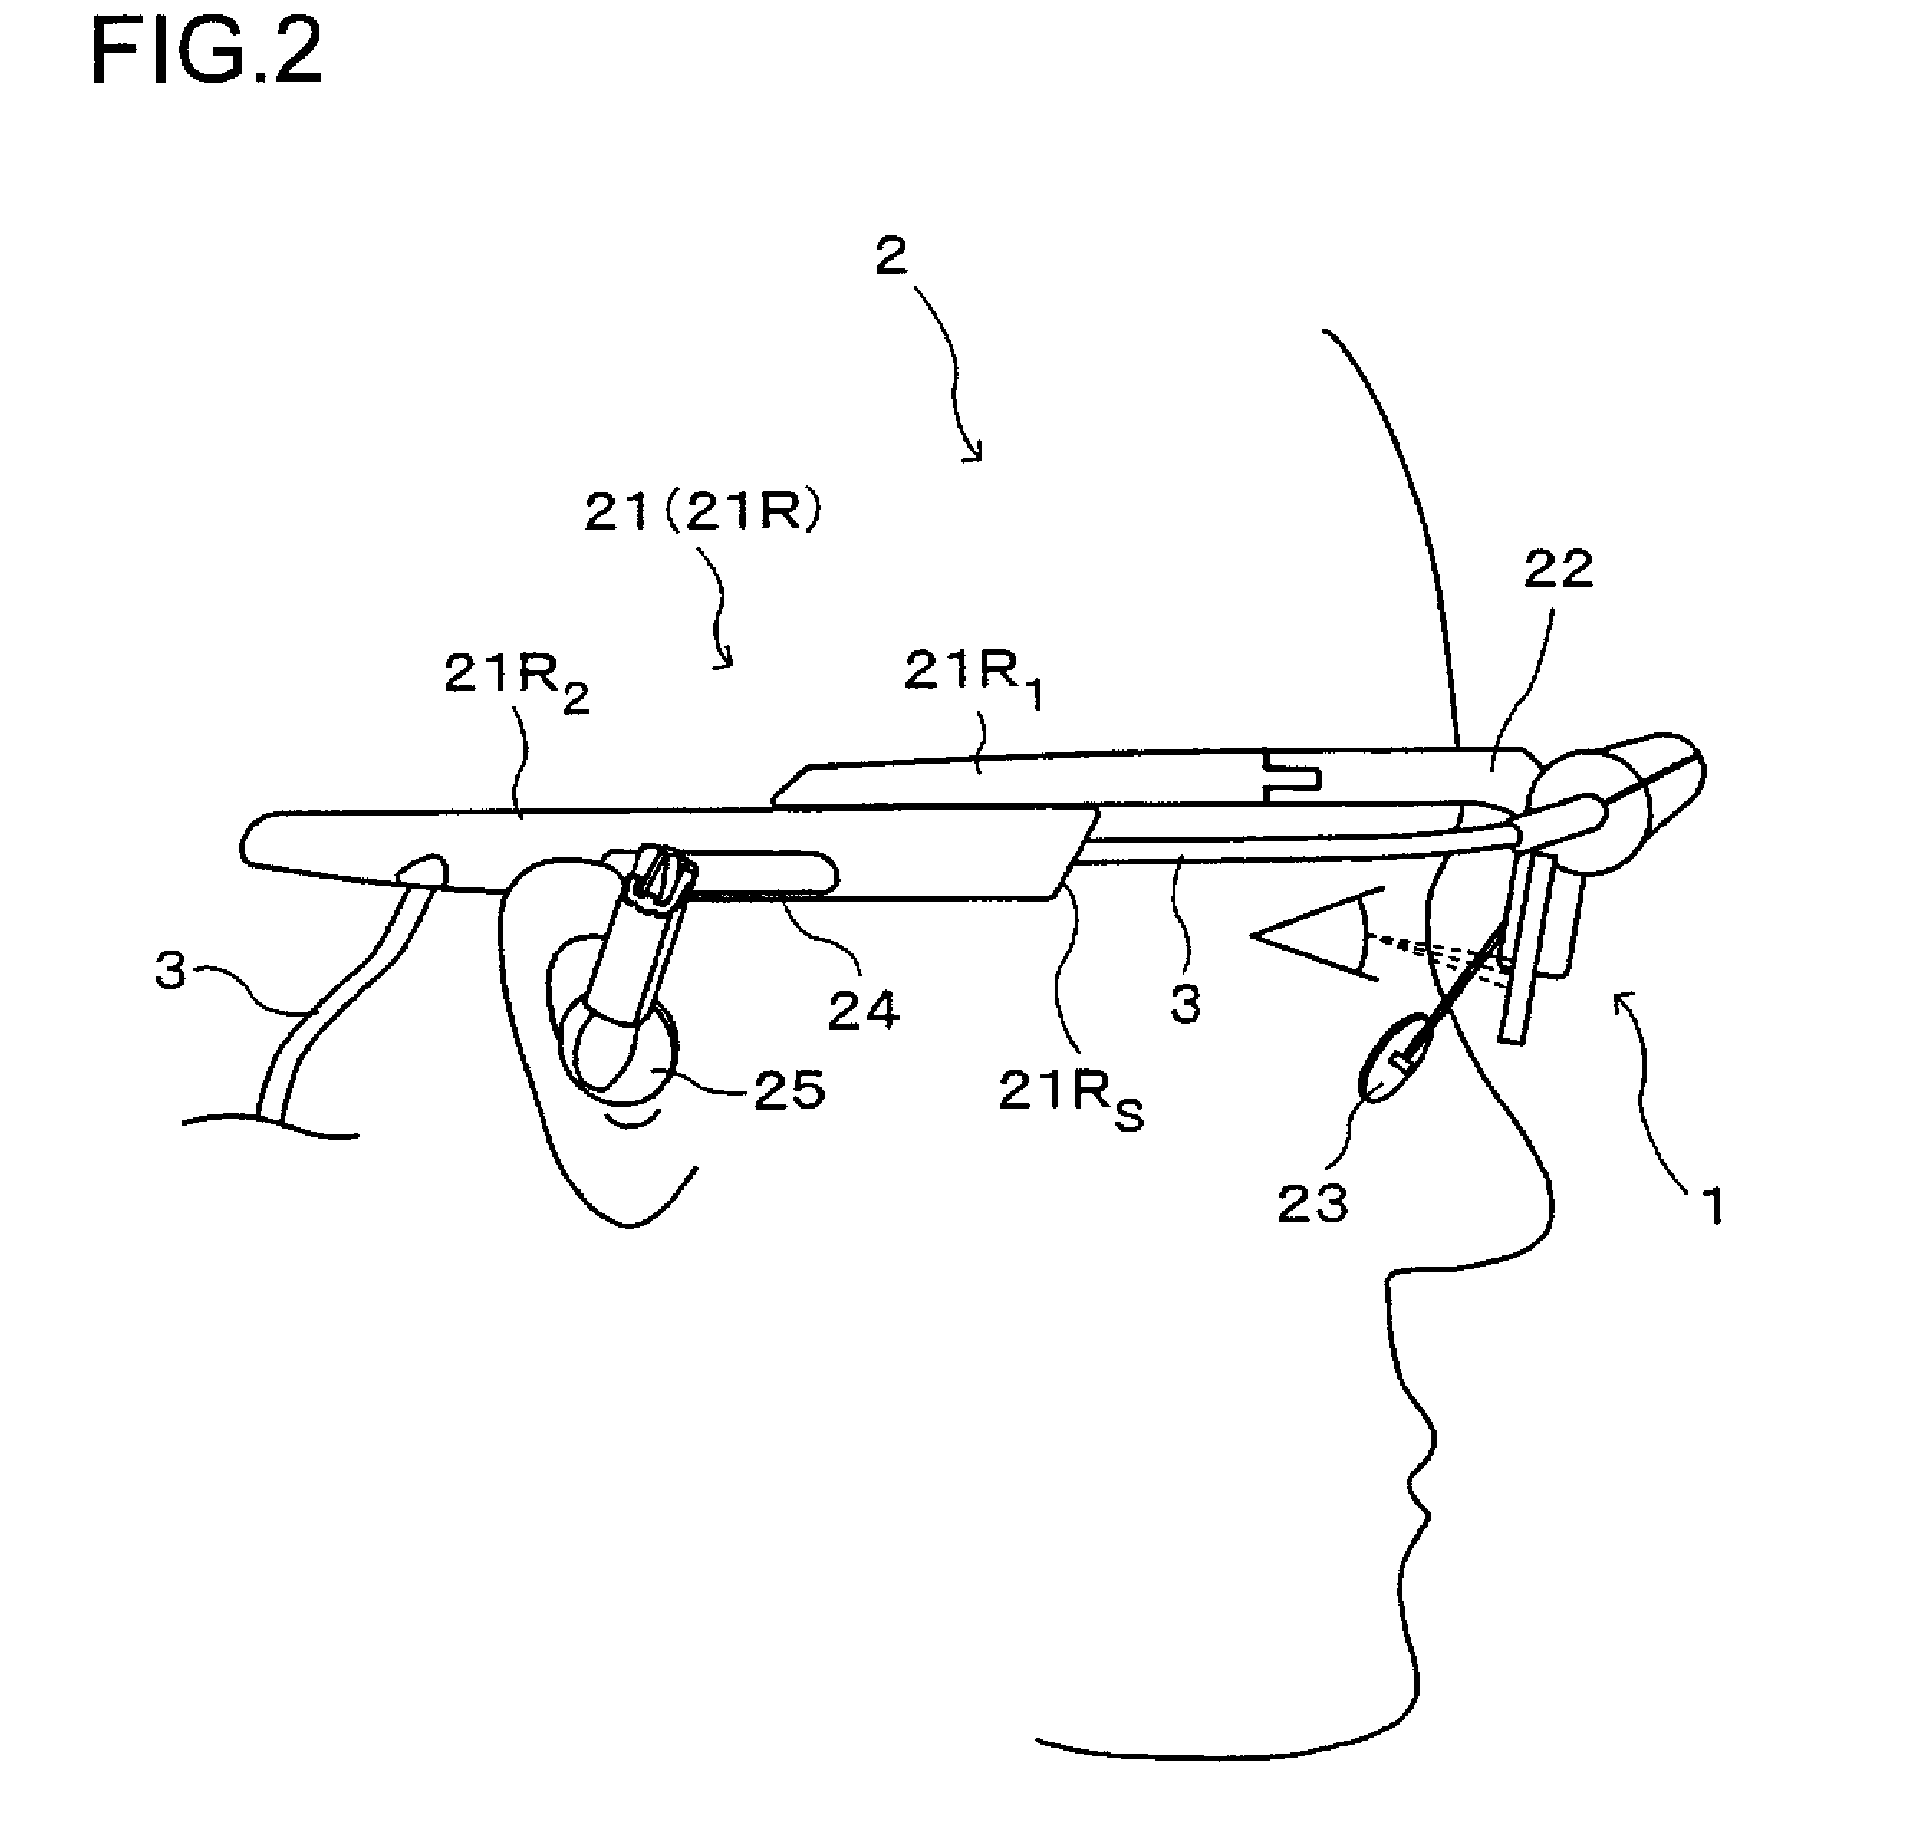 Image display apparatus and head-mounted display